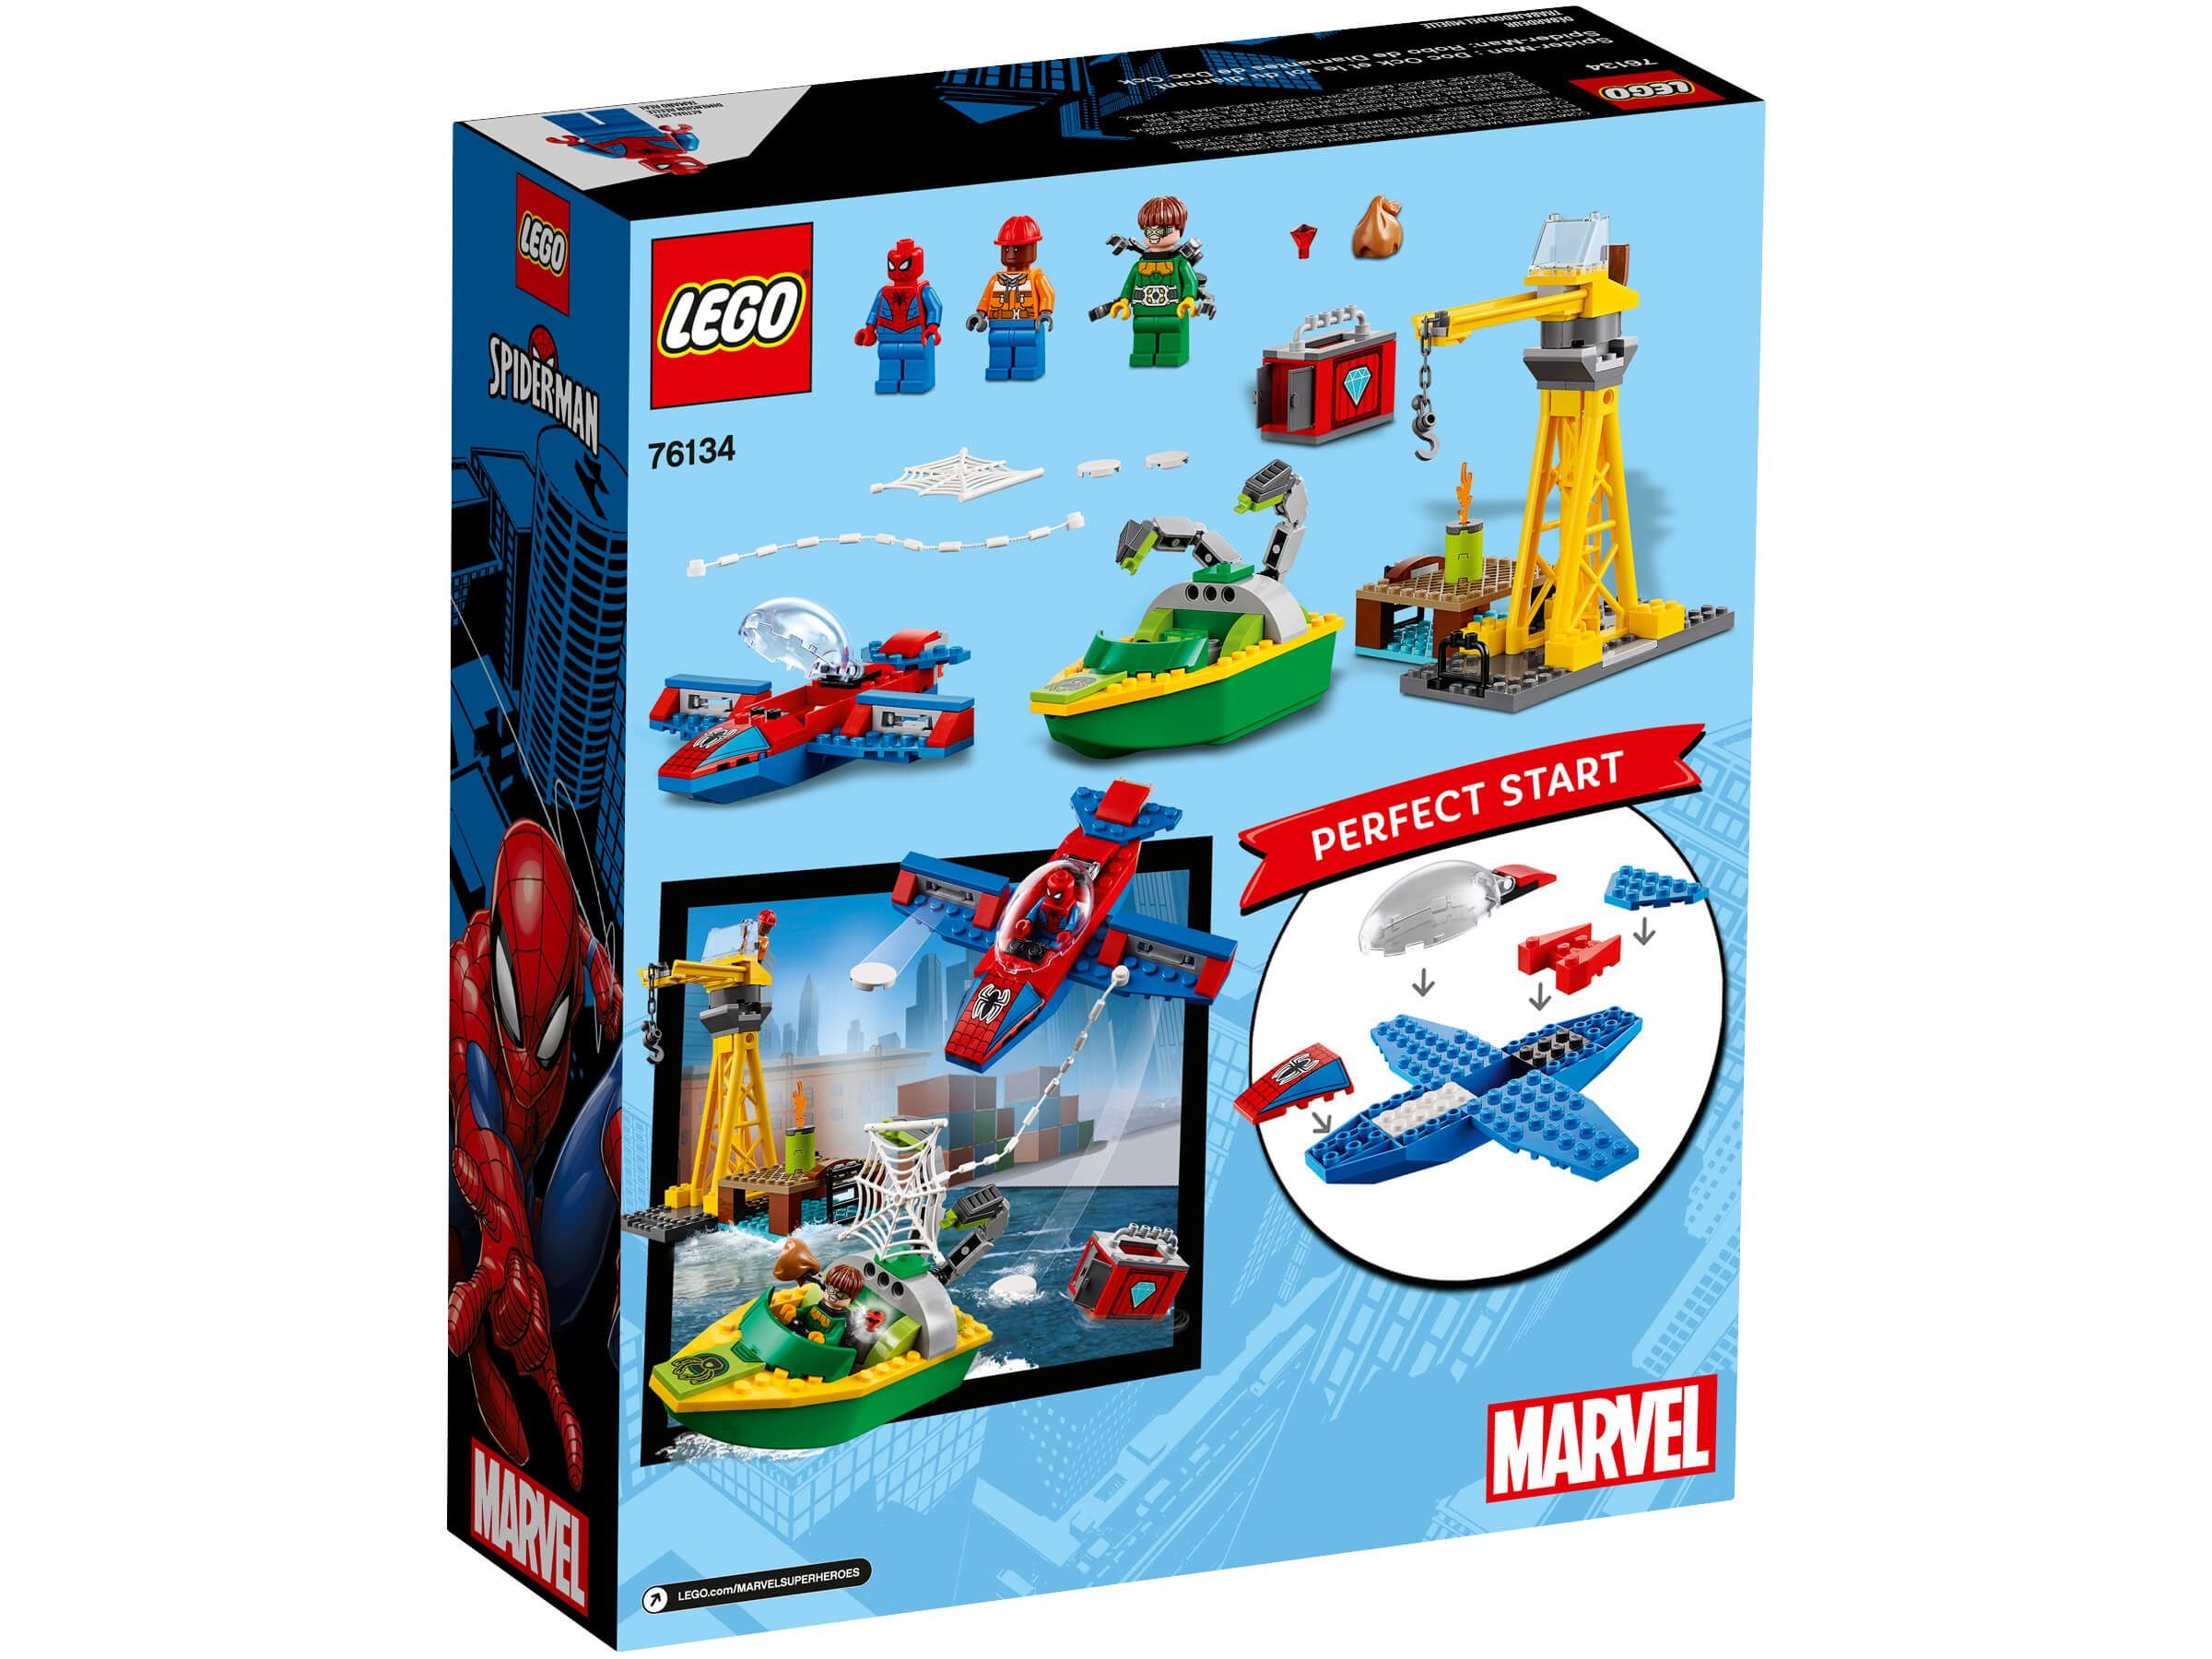 LEGO Super Heroes 76134 Spider-Man: Dock Ock Diamond LEGO_76134_Box5_v39_2400.jpg